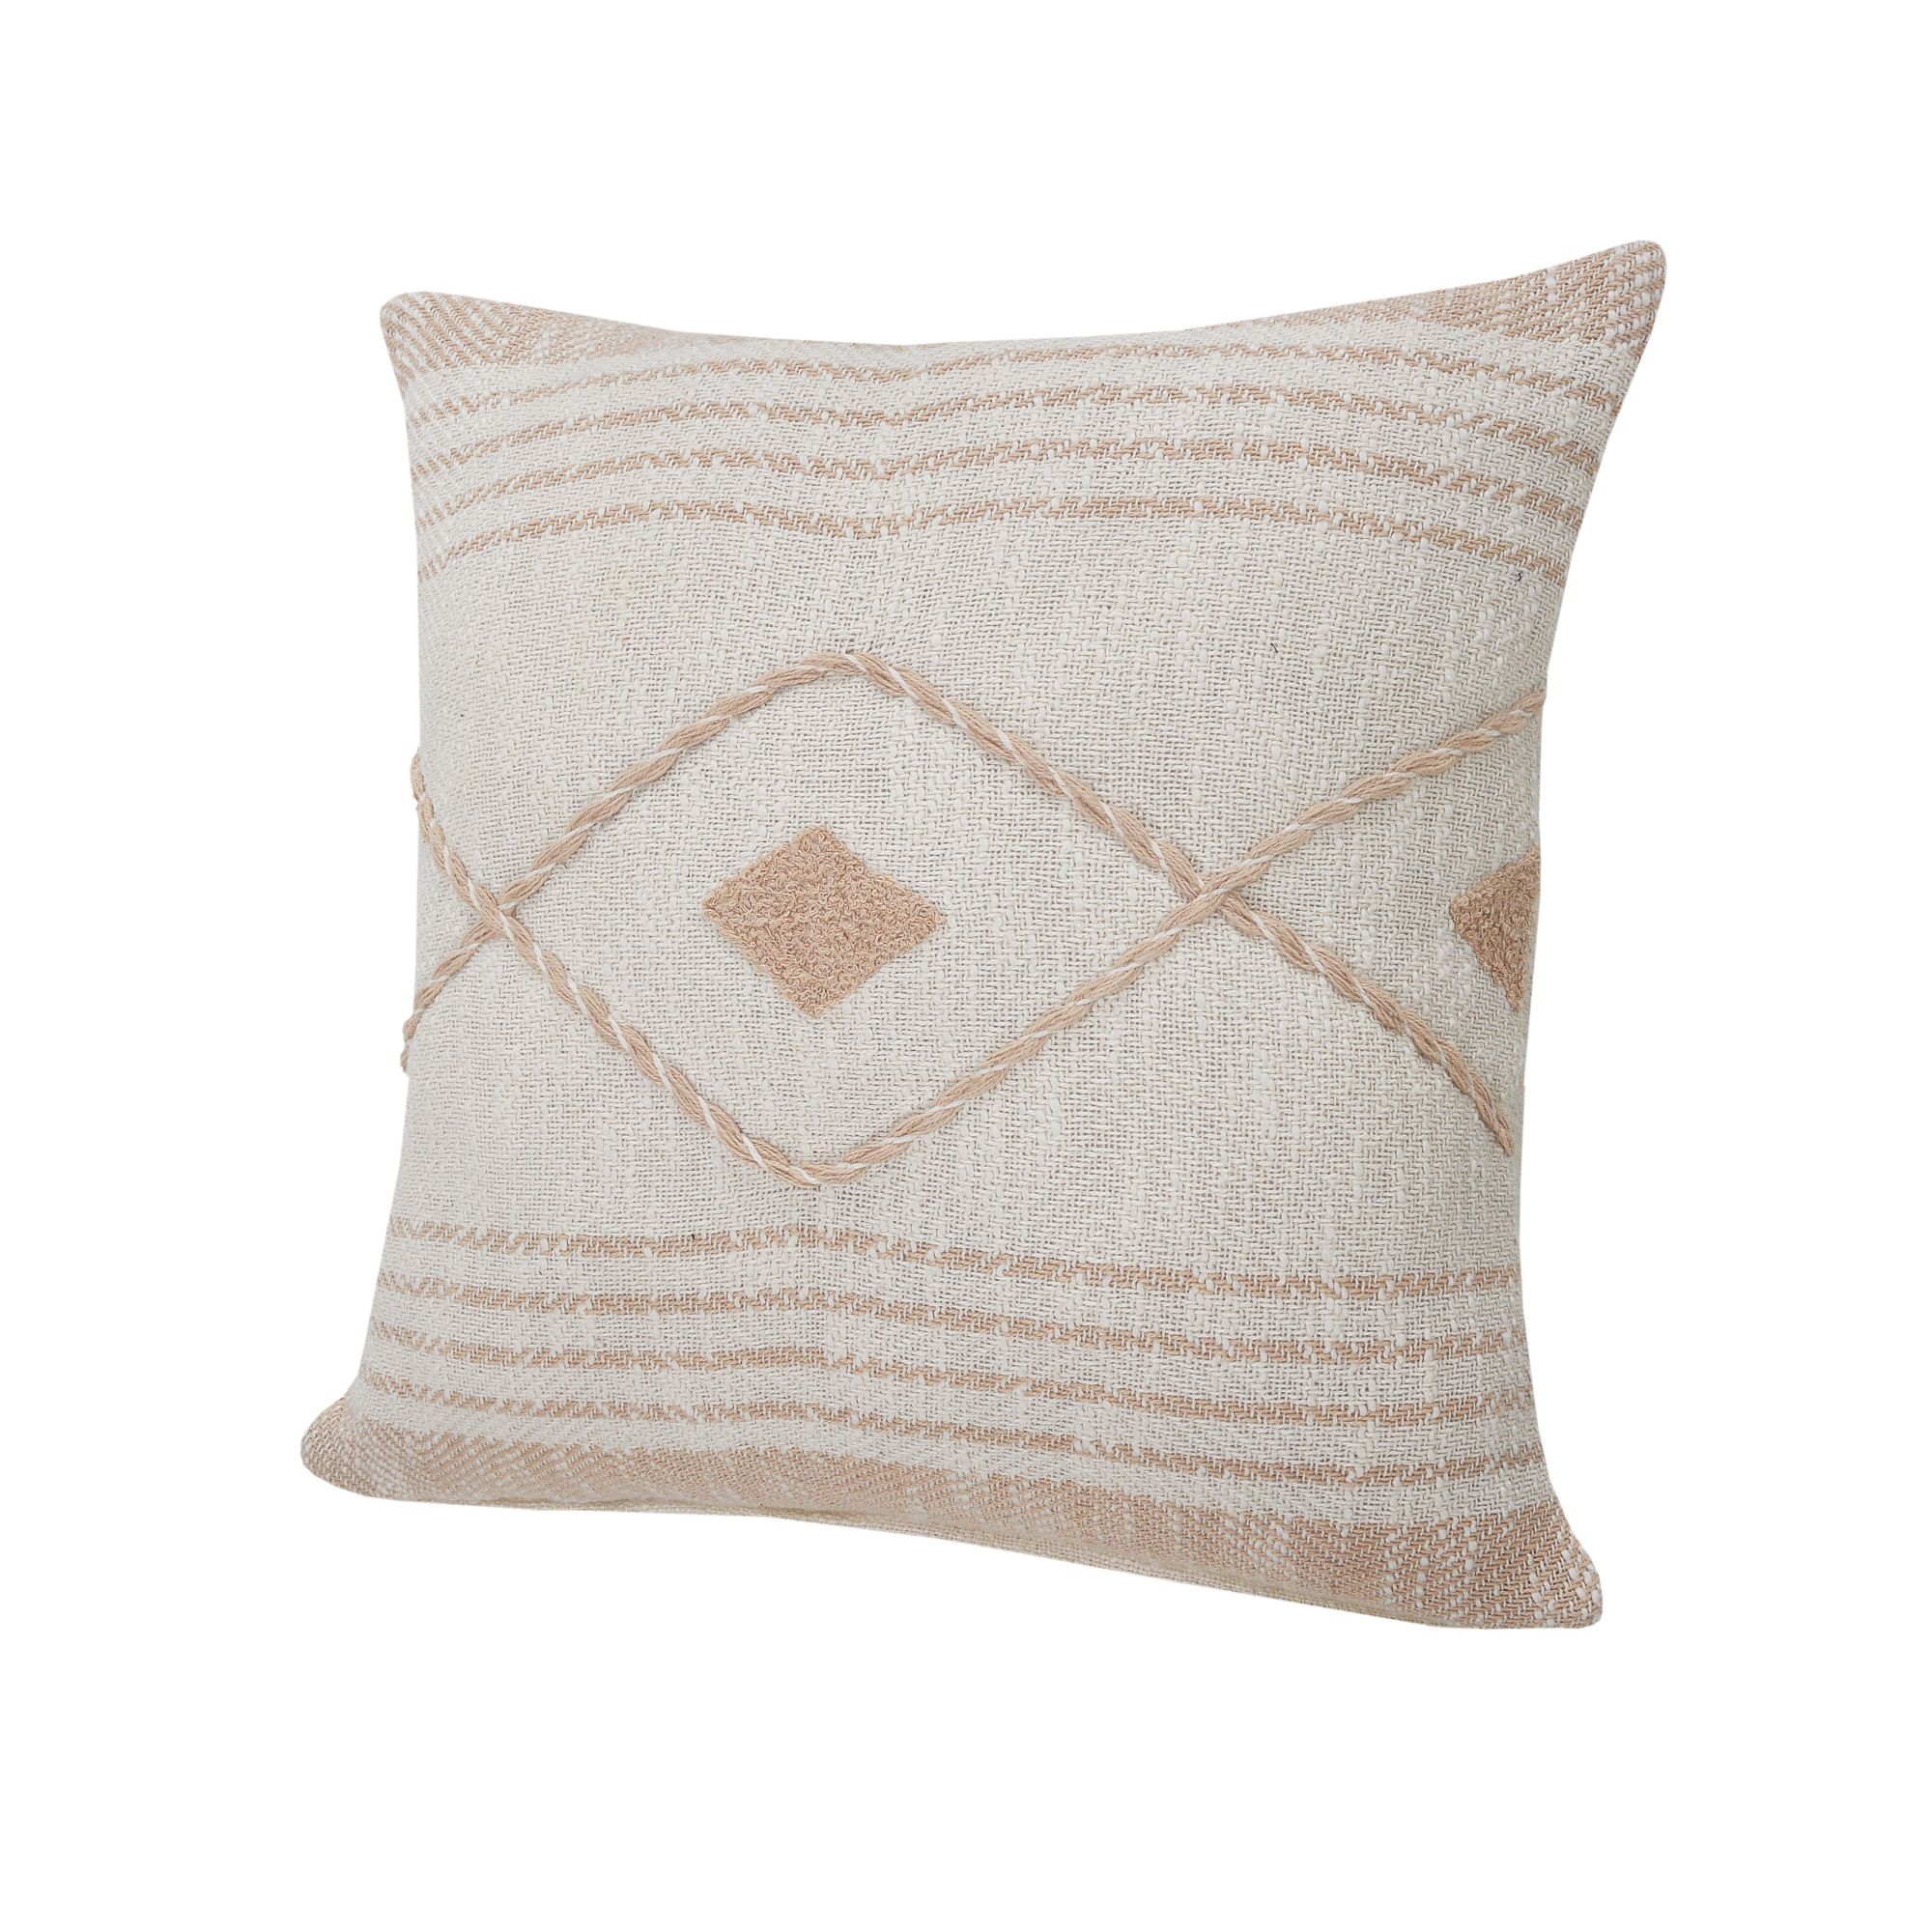 Laddha Home Designs 20" Tan and White Geometric Diamond Square Throw Pillow